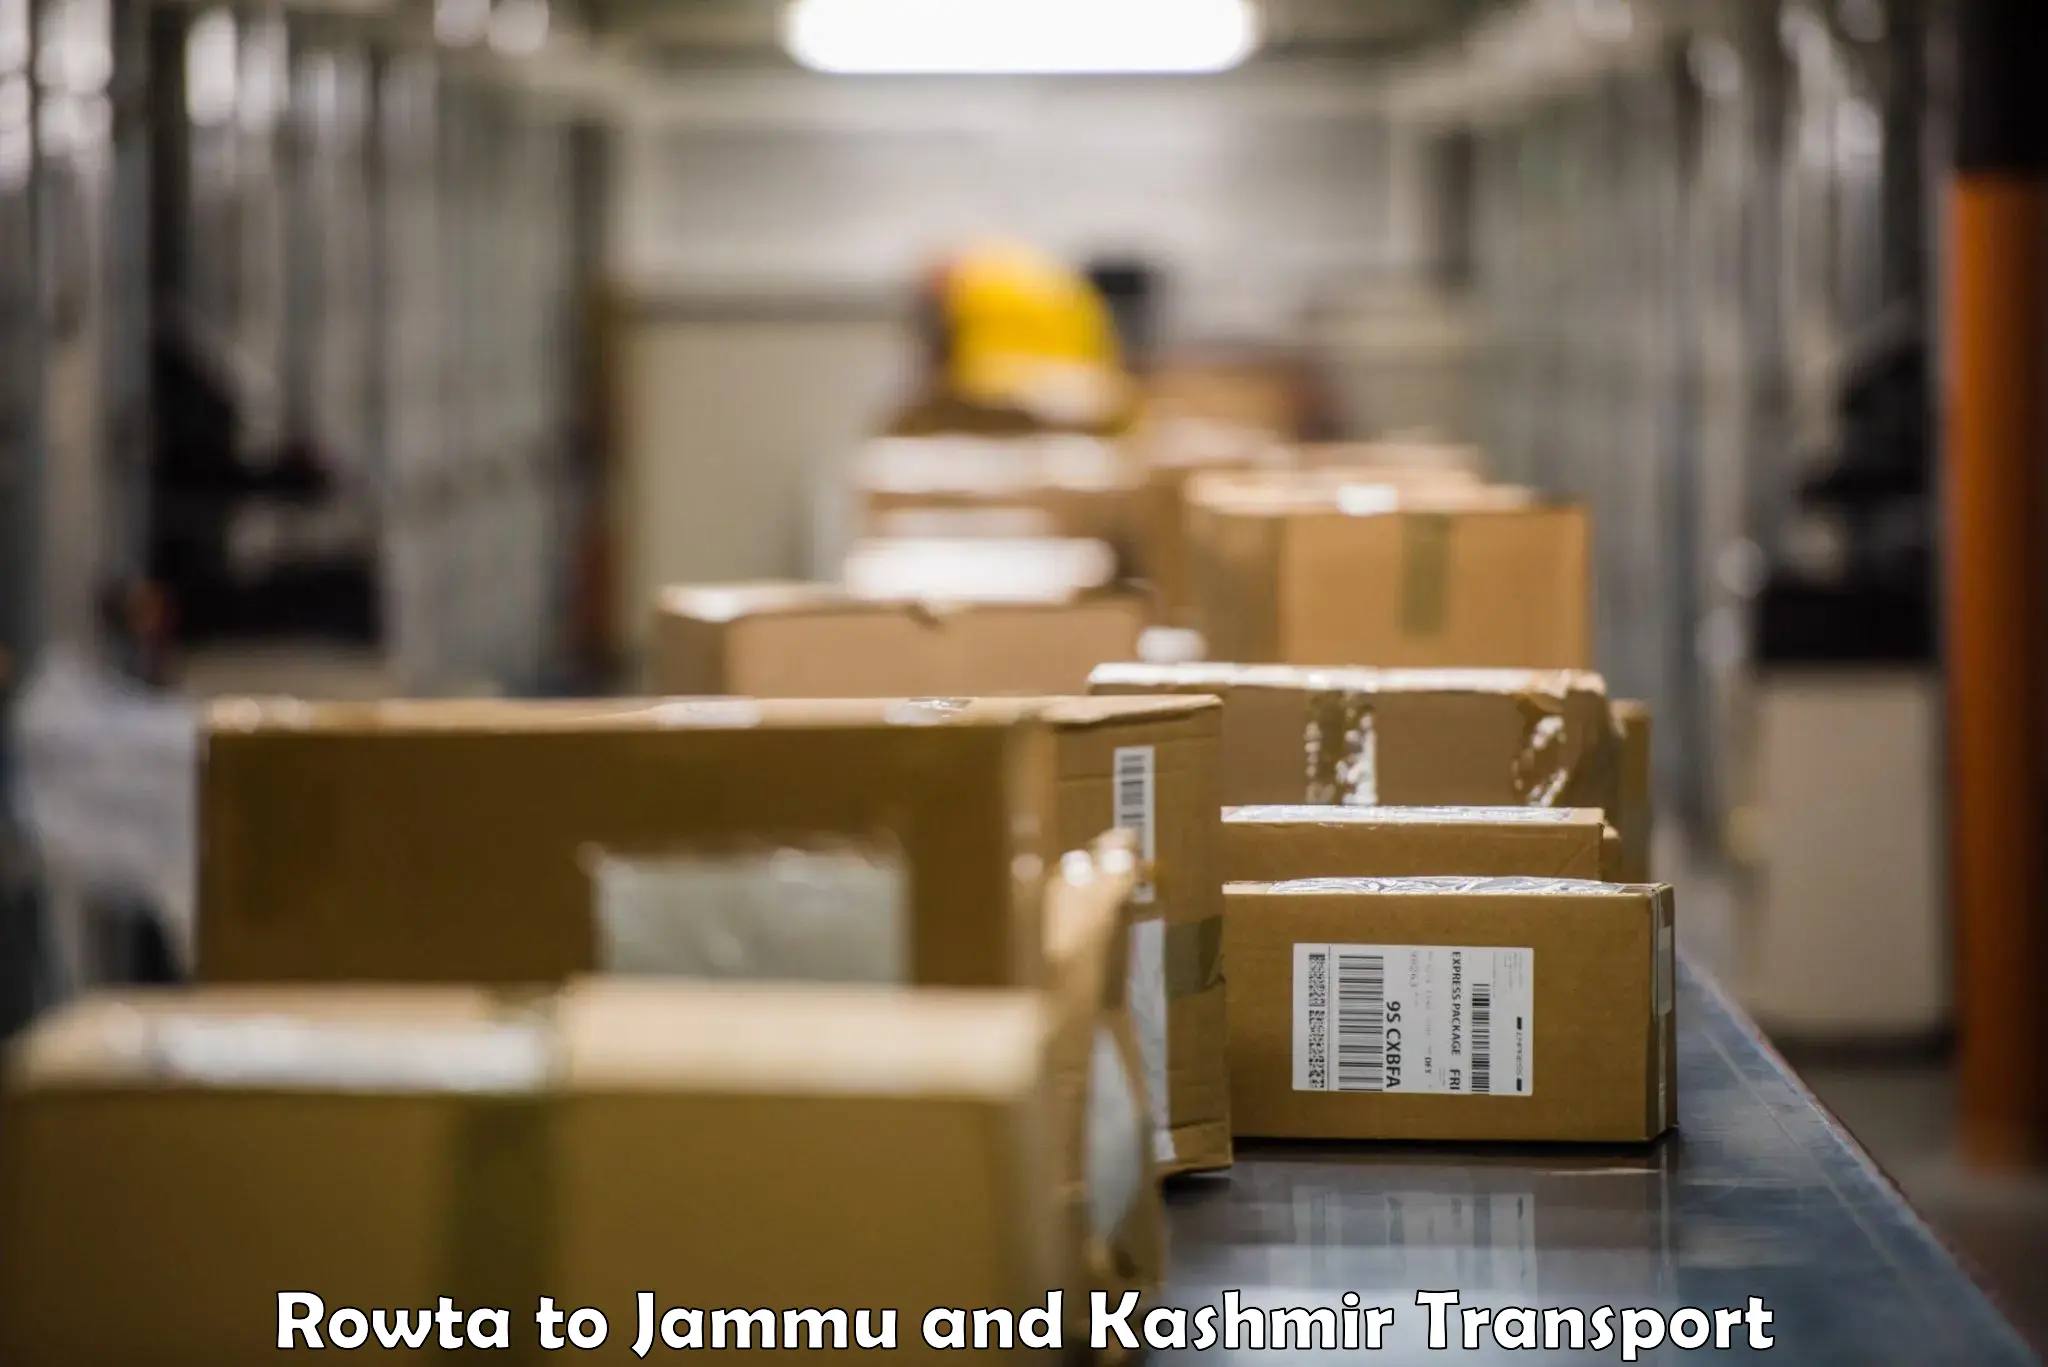 Lorry transport service Rowta to Jammu and Kashmir